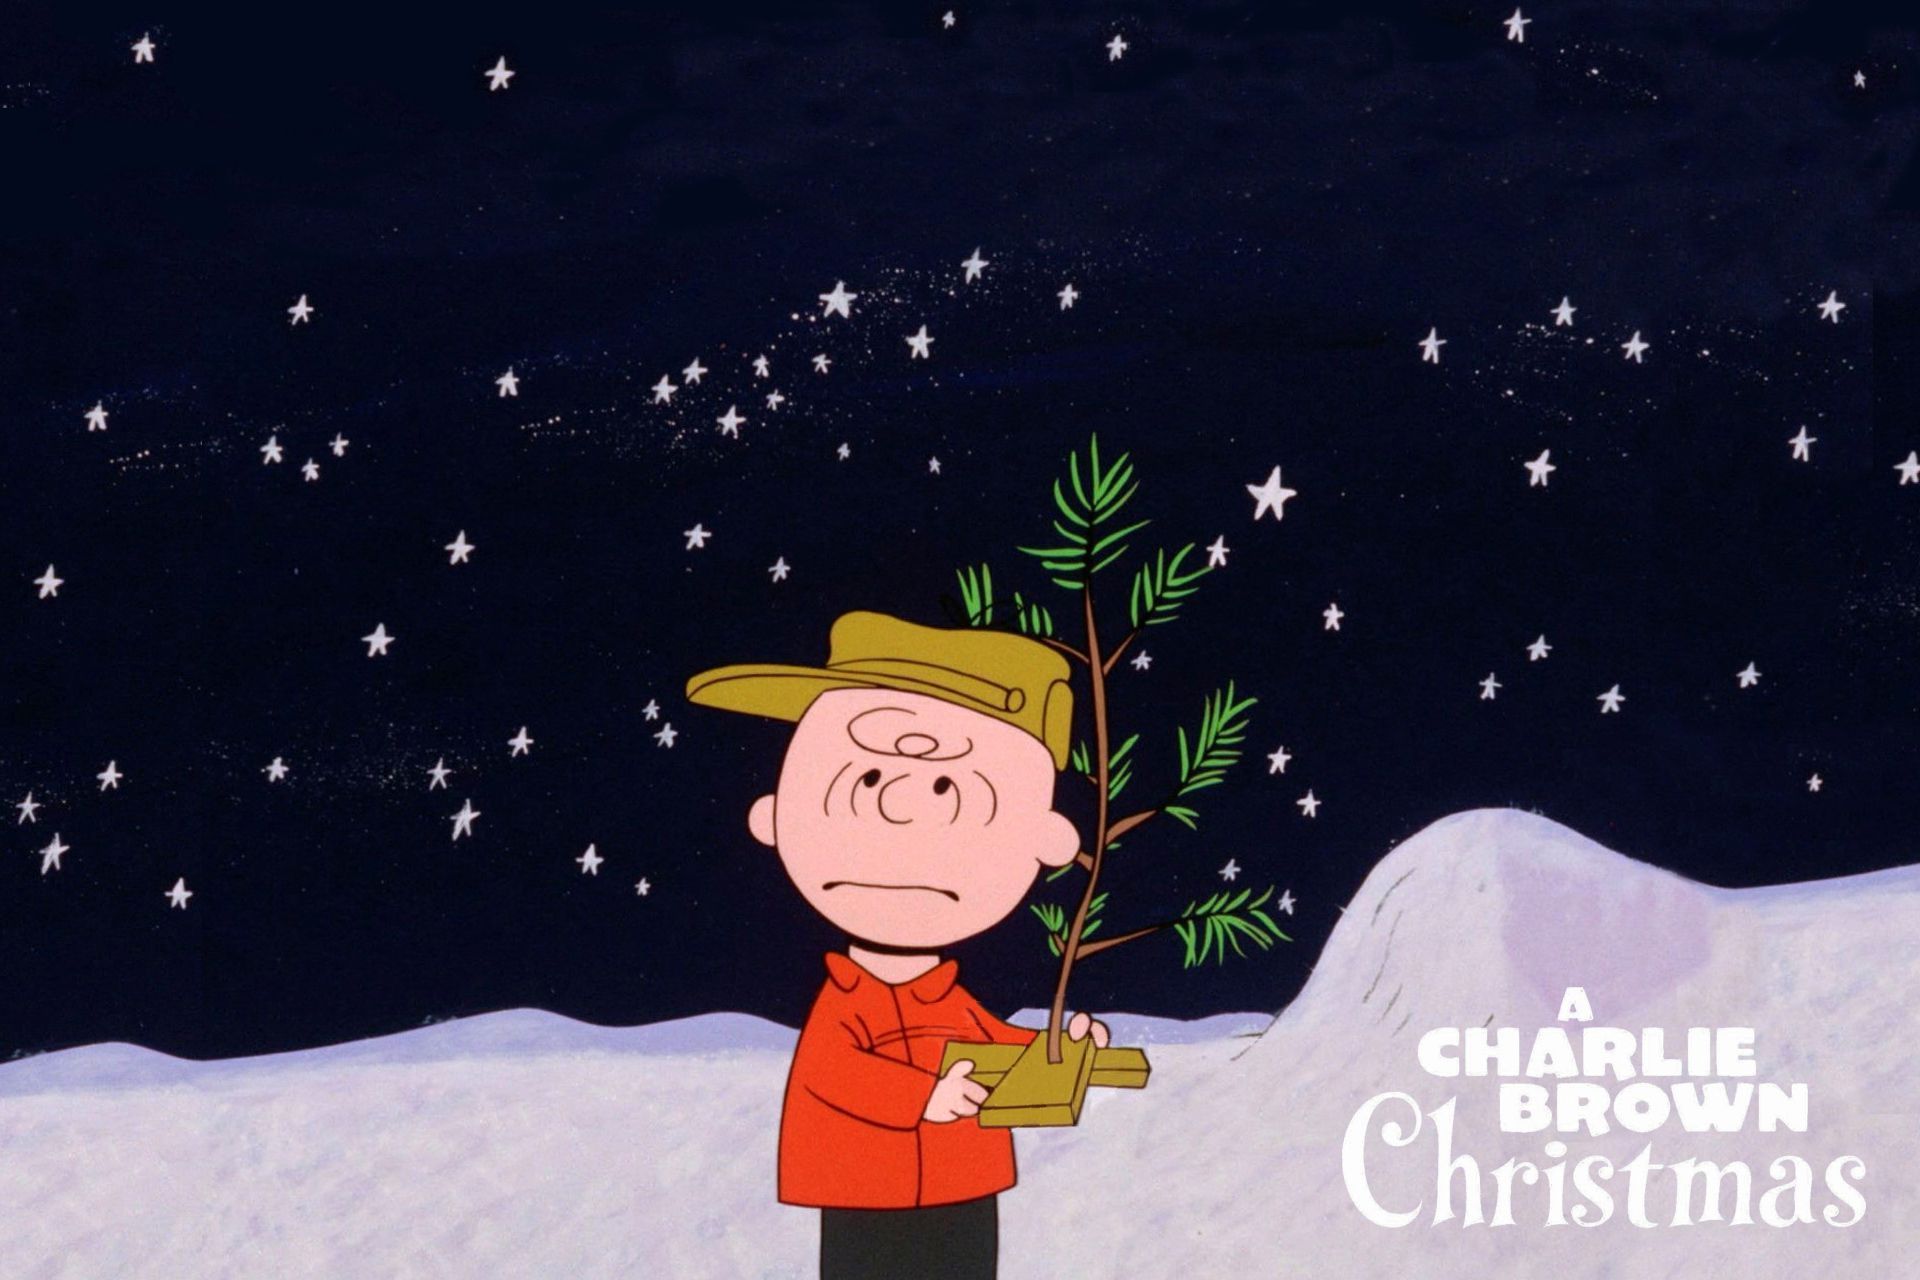 Charlie brown christmas wallpaper - Charlie Brown